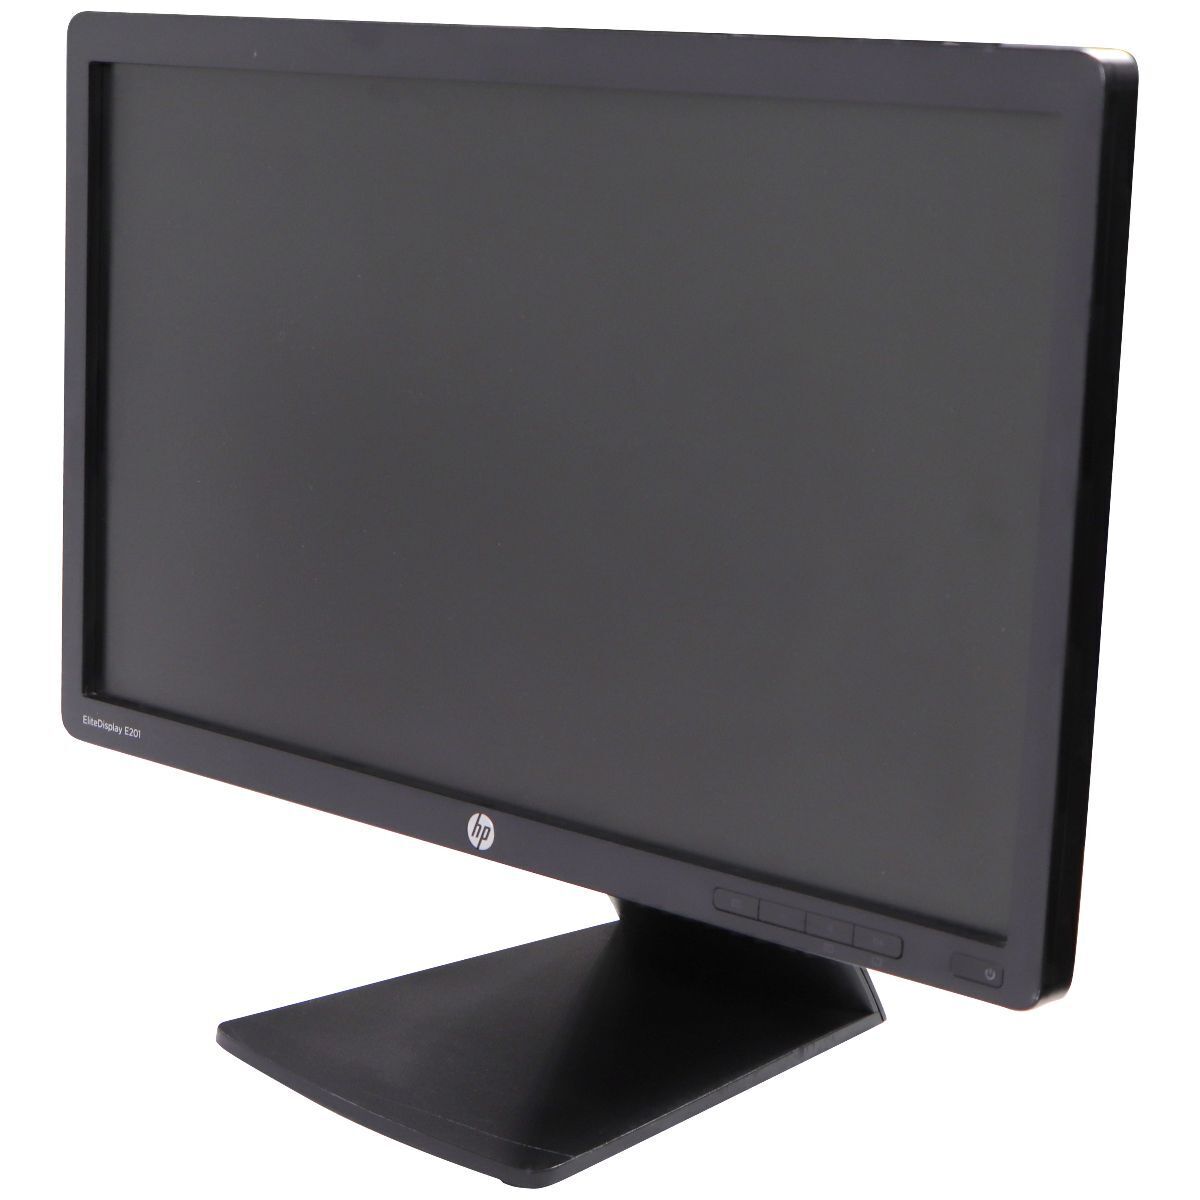 FAIR HP EliteDisplay E201 (20-inch) 1600 x 900 TFT LCD Monitor (C9V73A)